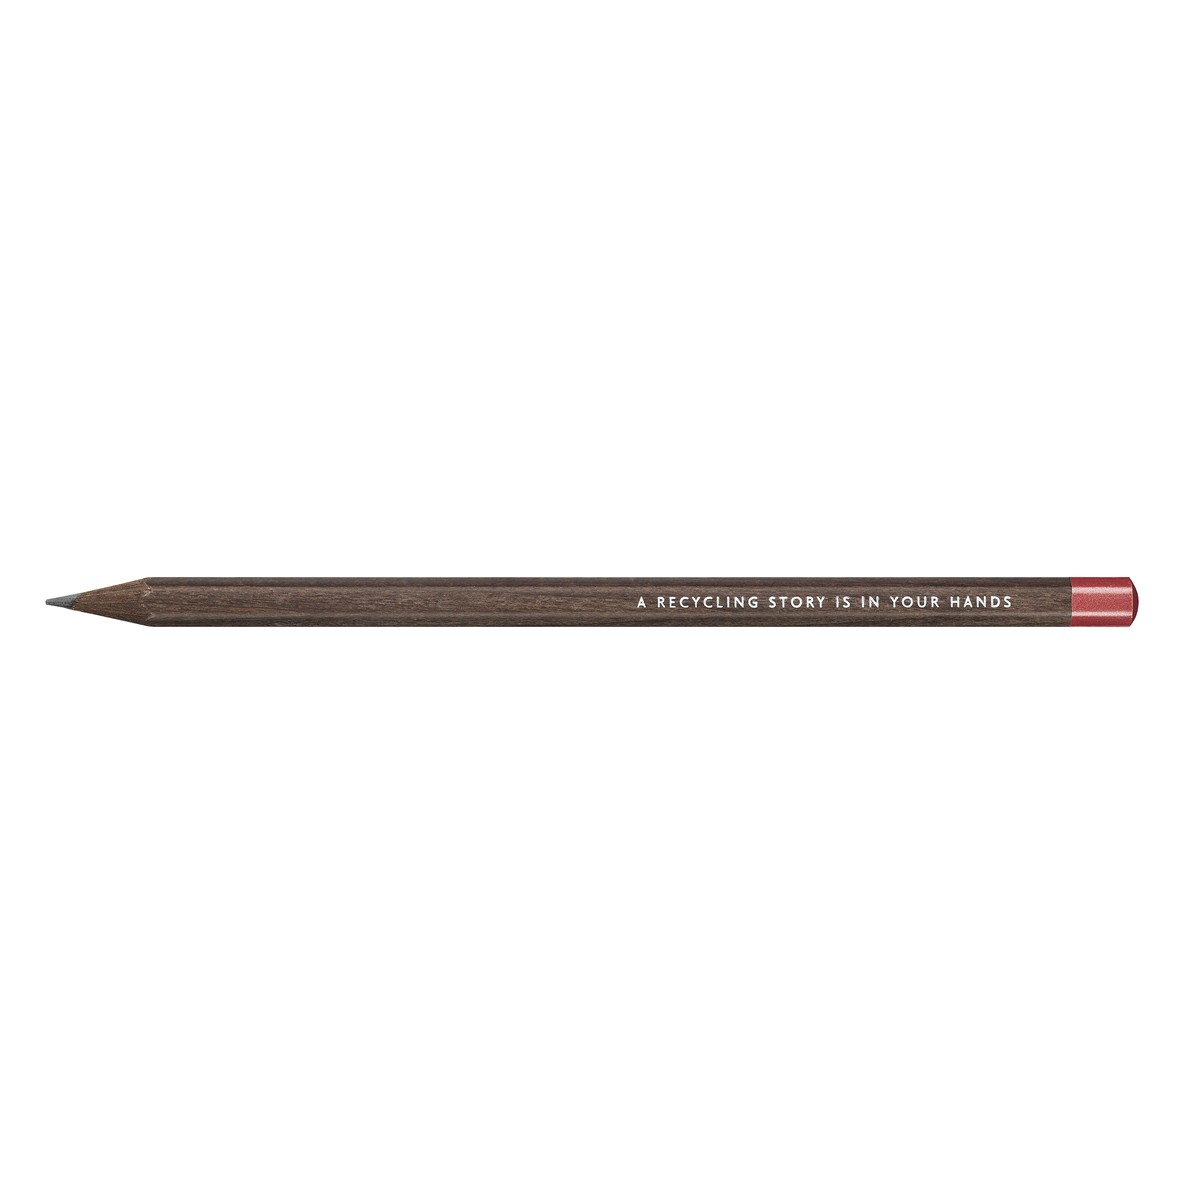 Caran d'Ache Set of 3 NESPRESSO SWISS WOOD Pencils – Limited Edition 4